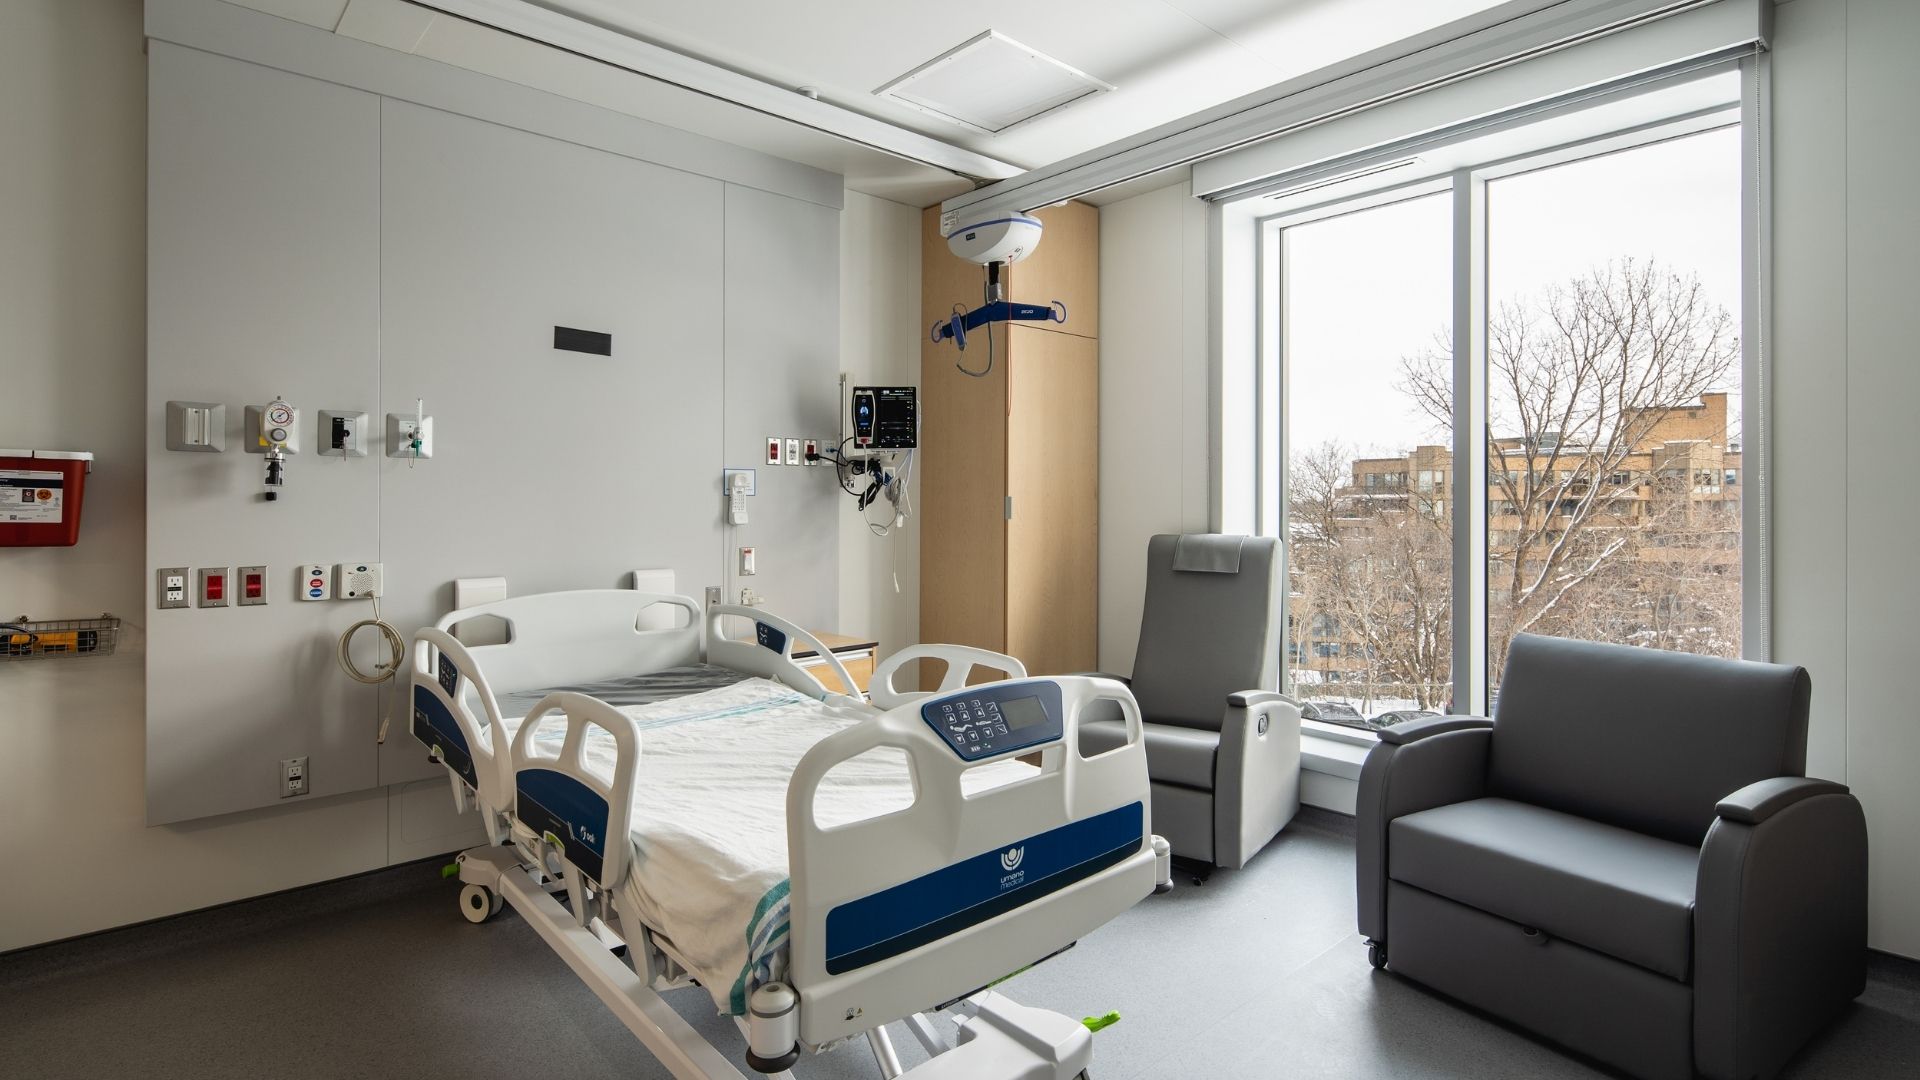 Prefab hospital - patient room